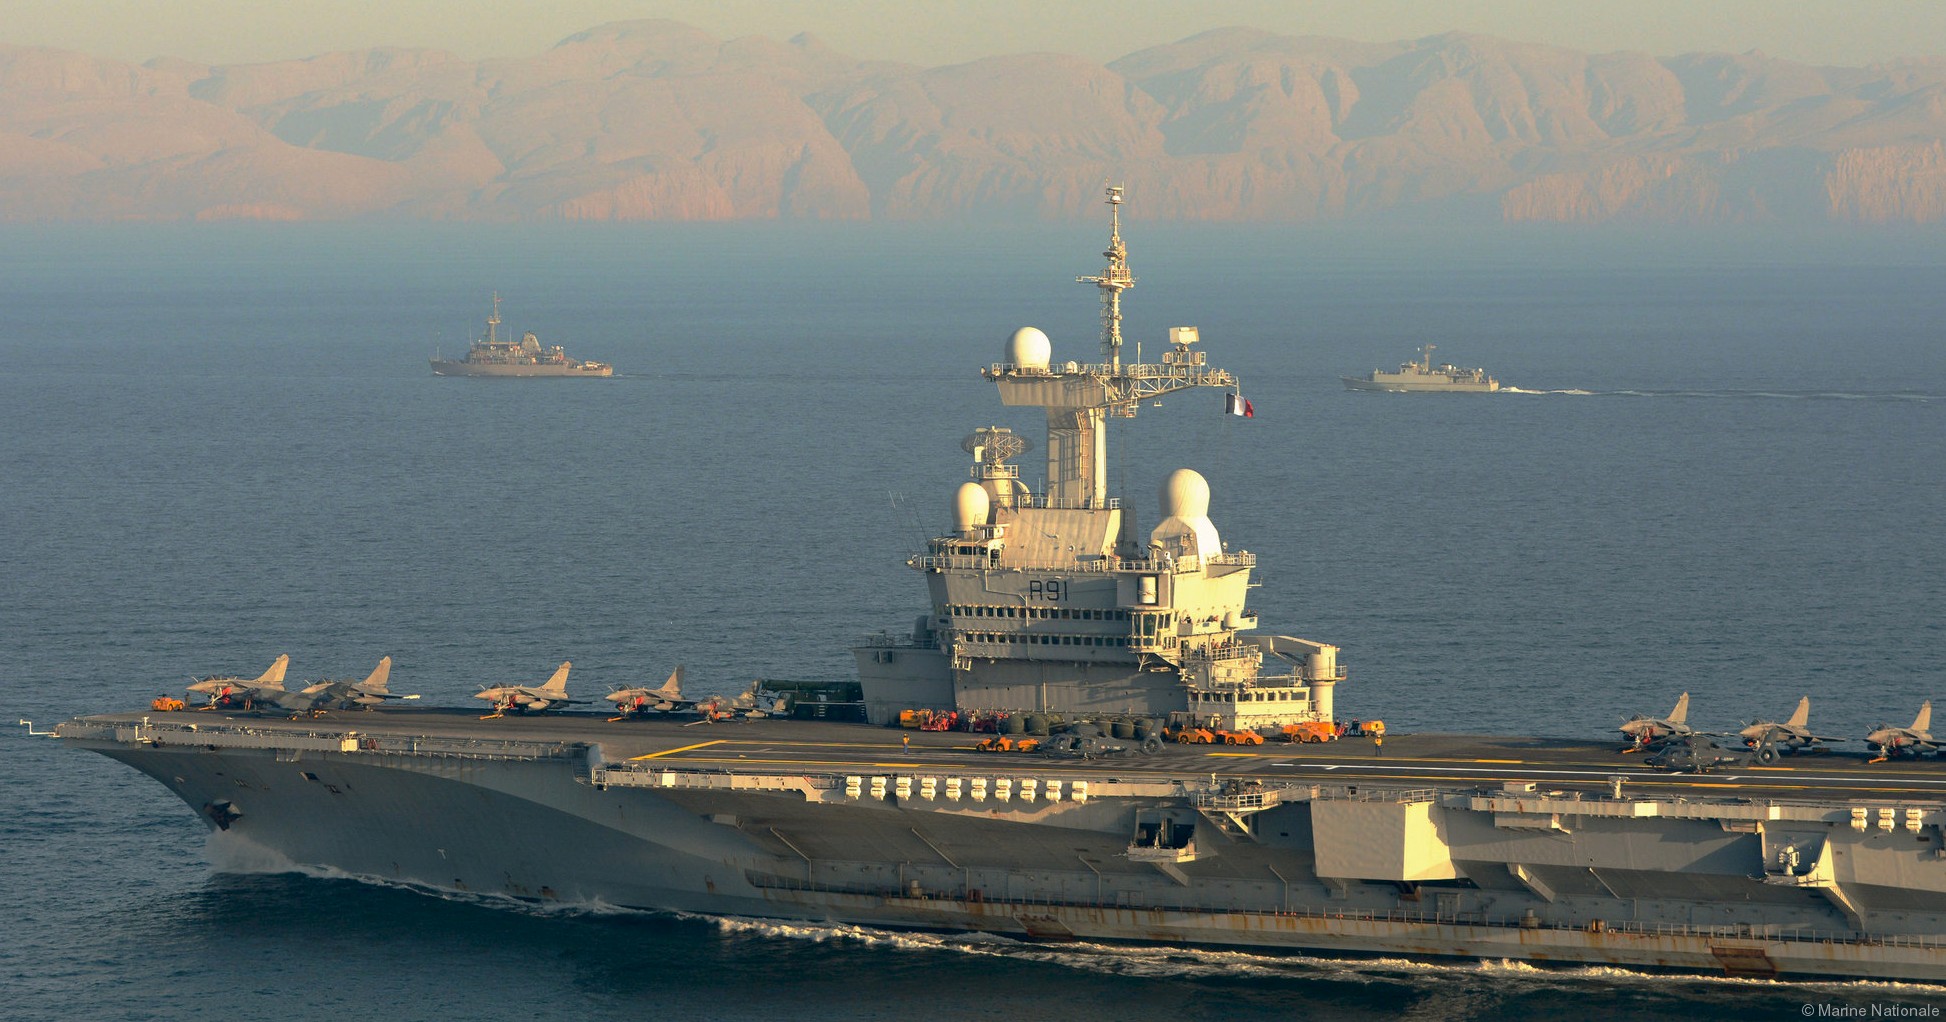  r-91 fs charles de gaulle aircraft carrier french navy 08 arabian gulf